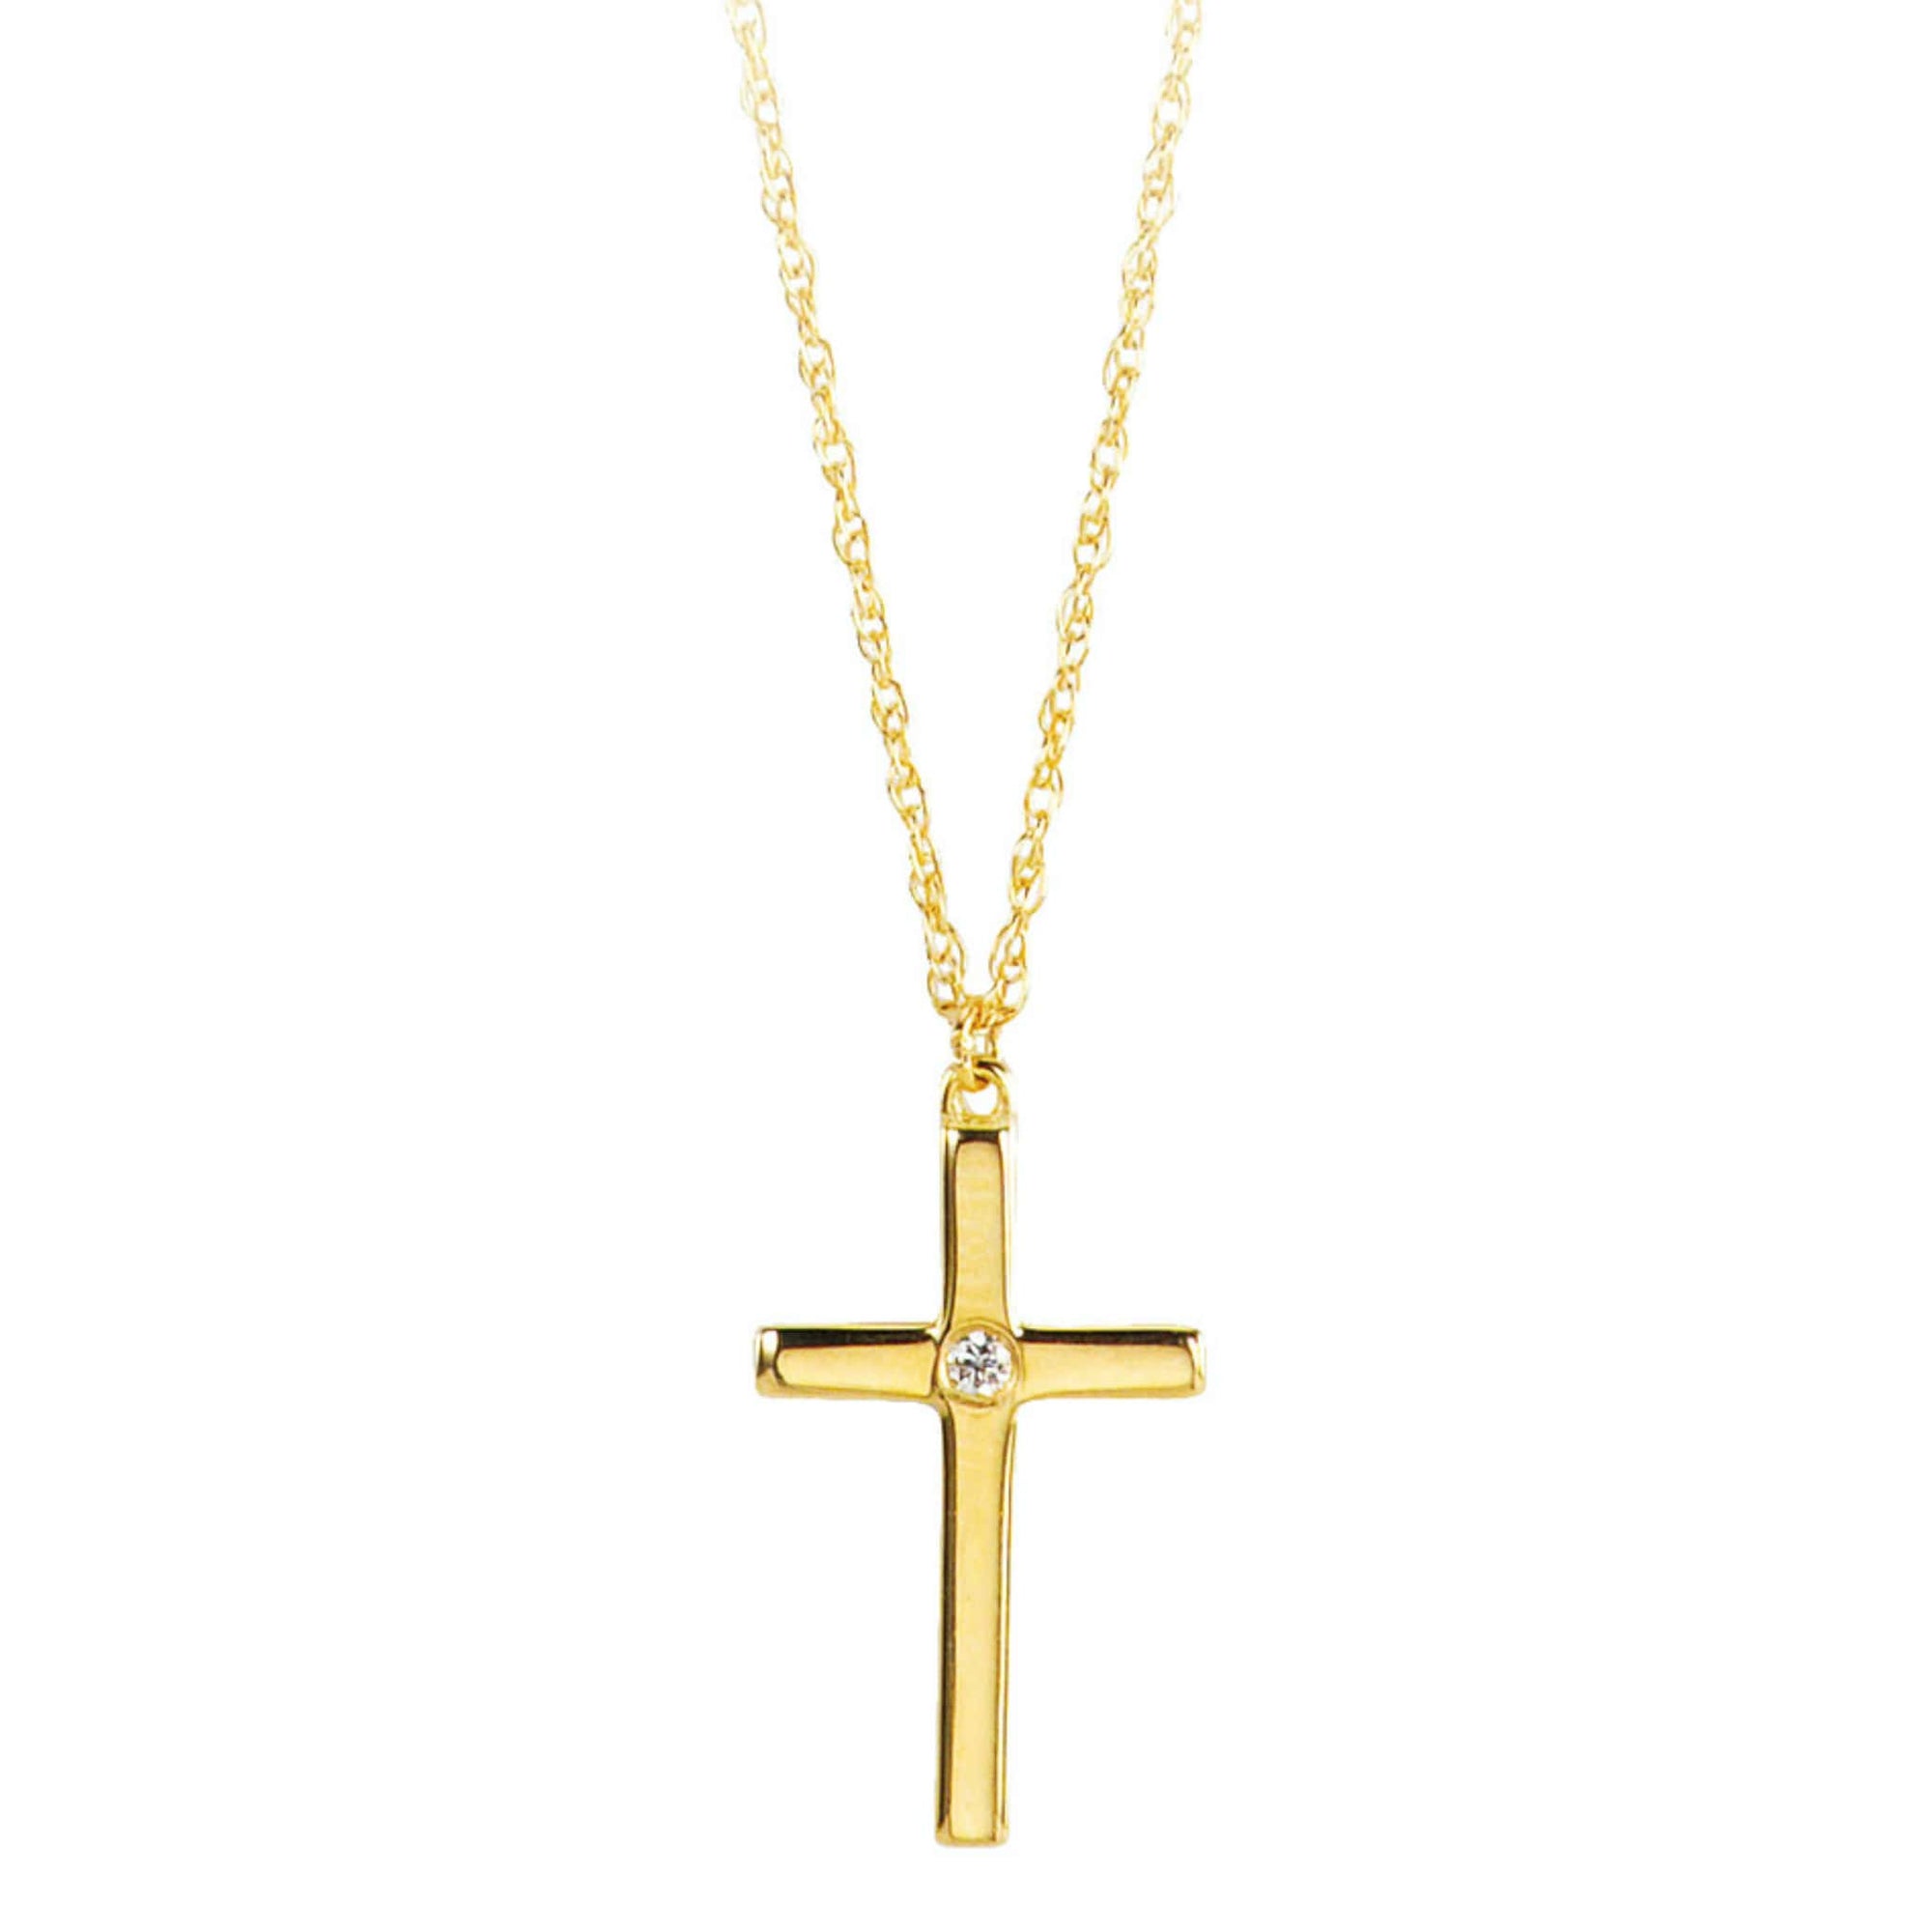 10k Yellow Gold Diamond Cross Necklace at Arman's Jewellers Kitchener-Waterloo